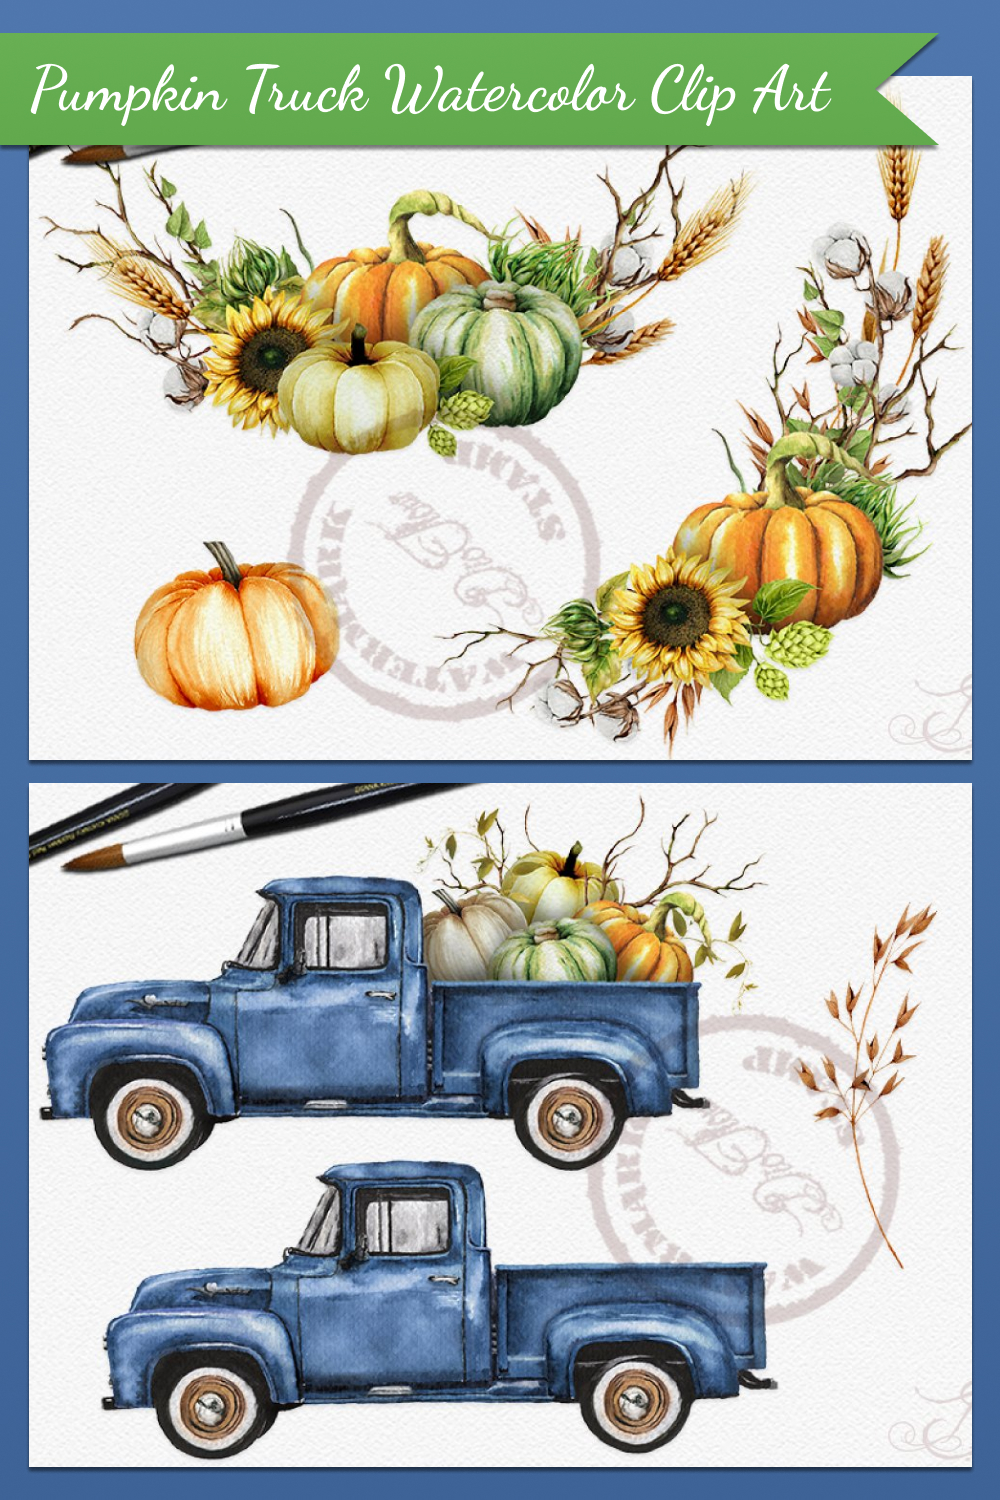 Pumpkin truck watercolor of pinterest.